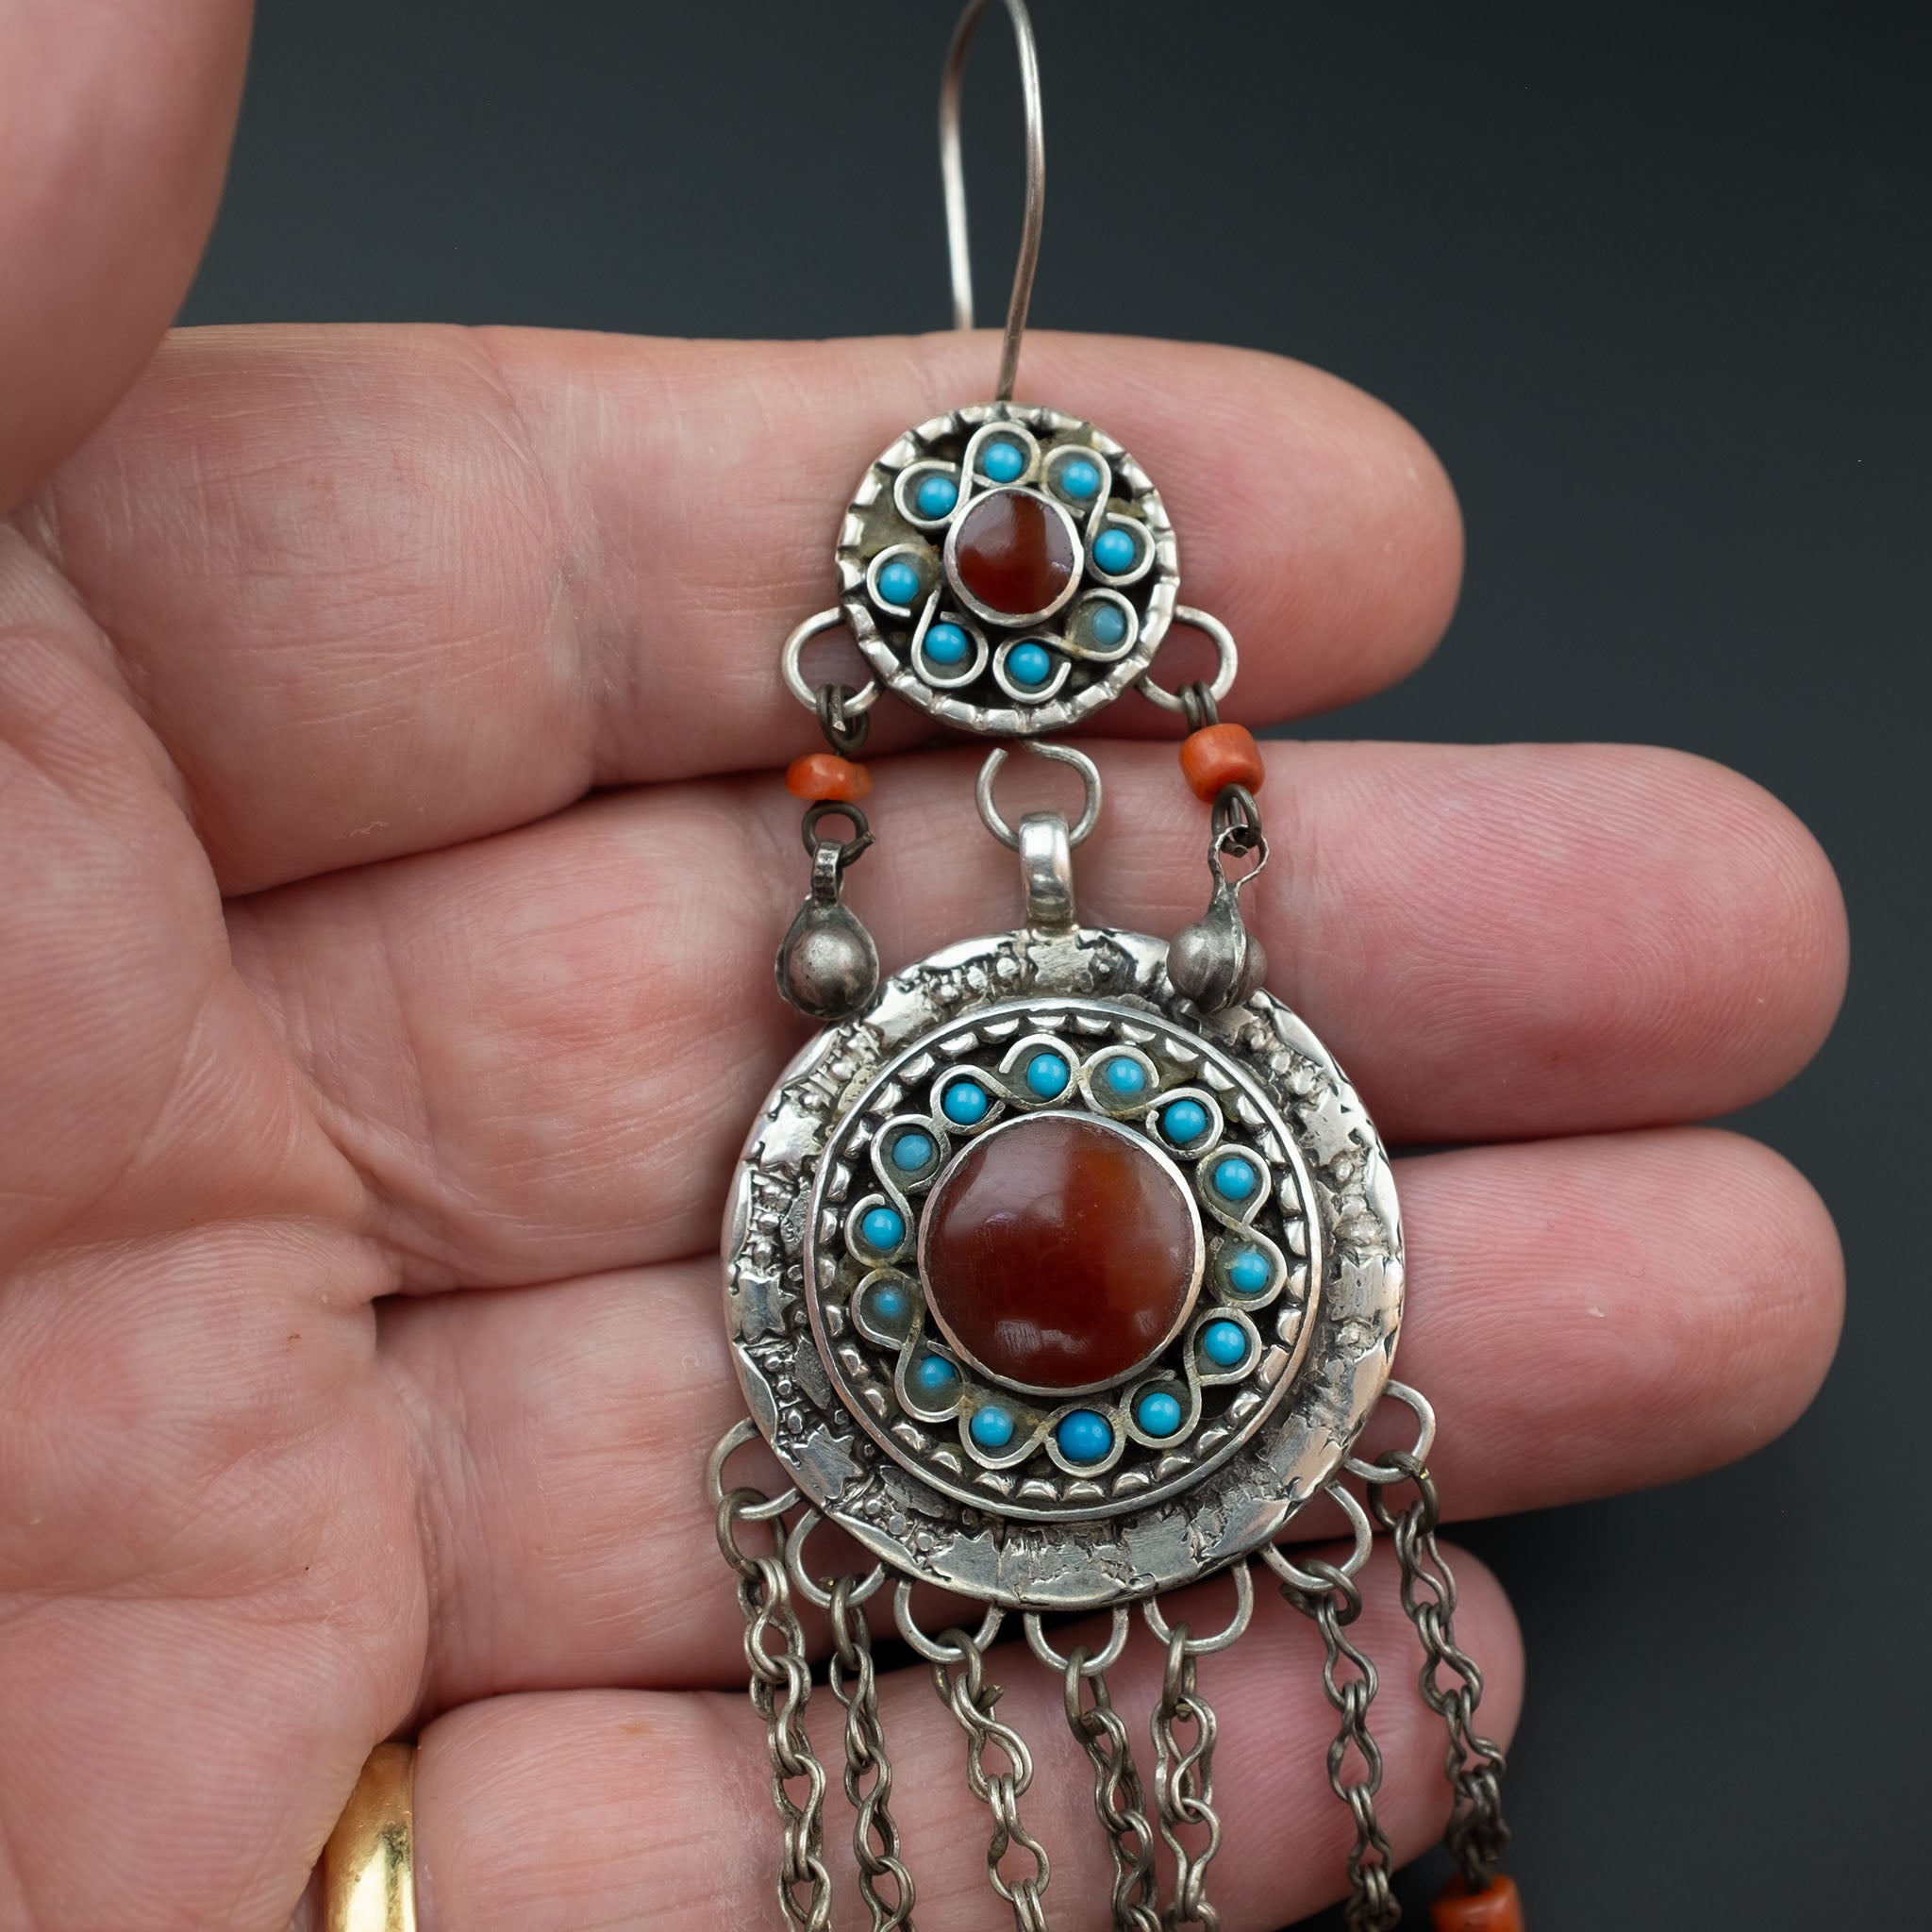 Exquisite Vintage Silver, Carnelian & Turquoise Uzbek Earrings